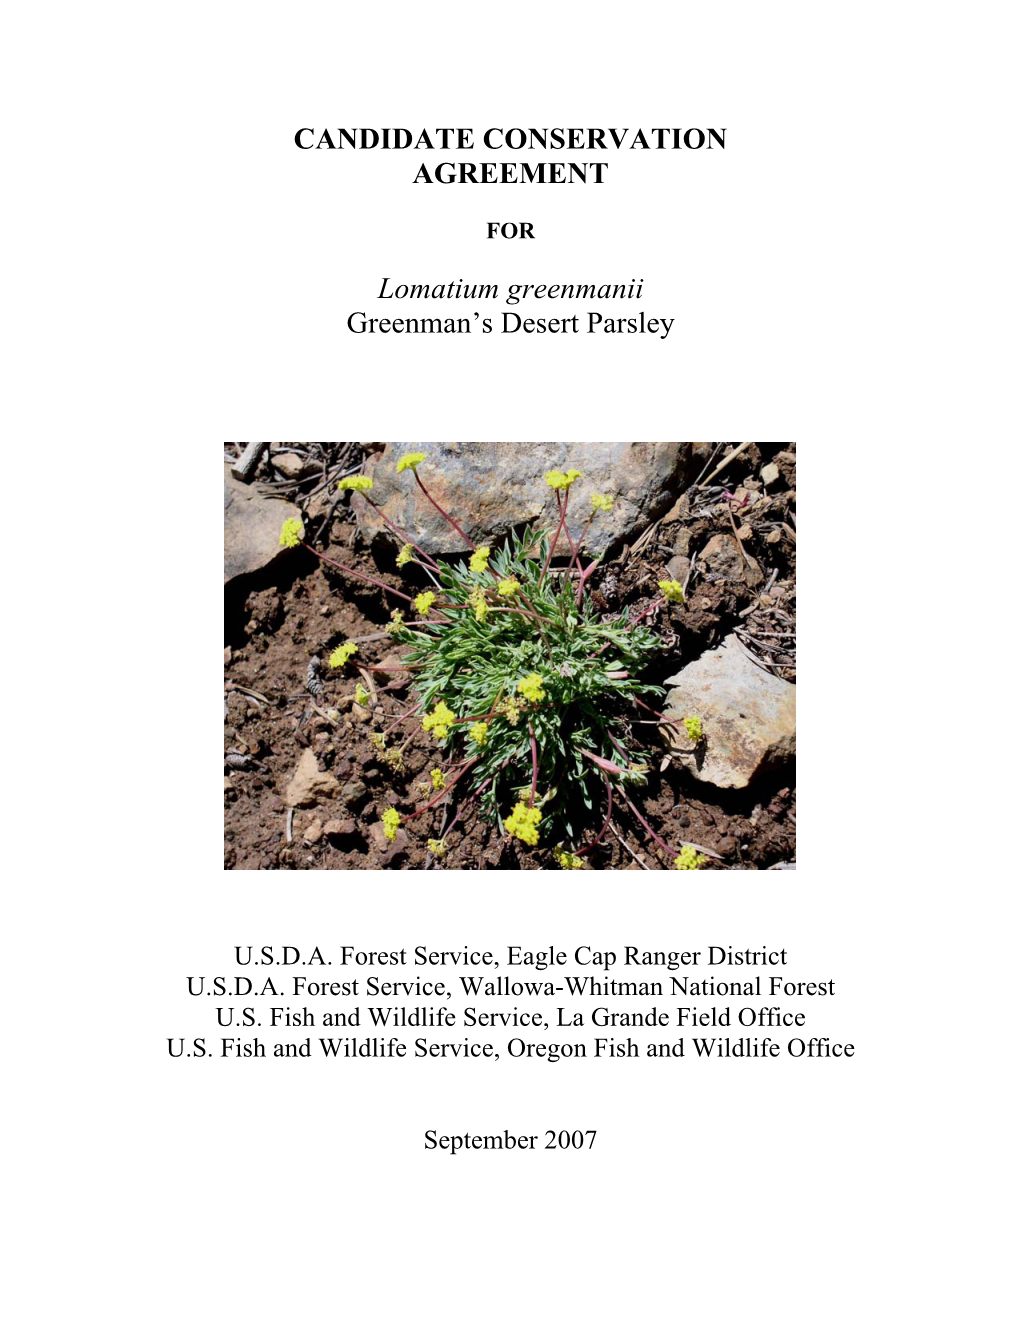 CANDIDATE CONSERVATION AGREEMENT Lomatium Greenmanii Greenman's Desert Parsley